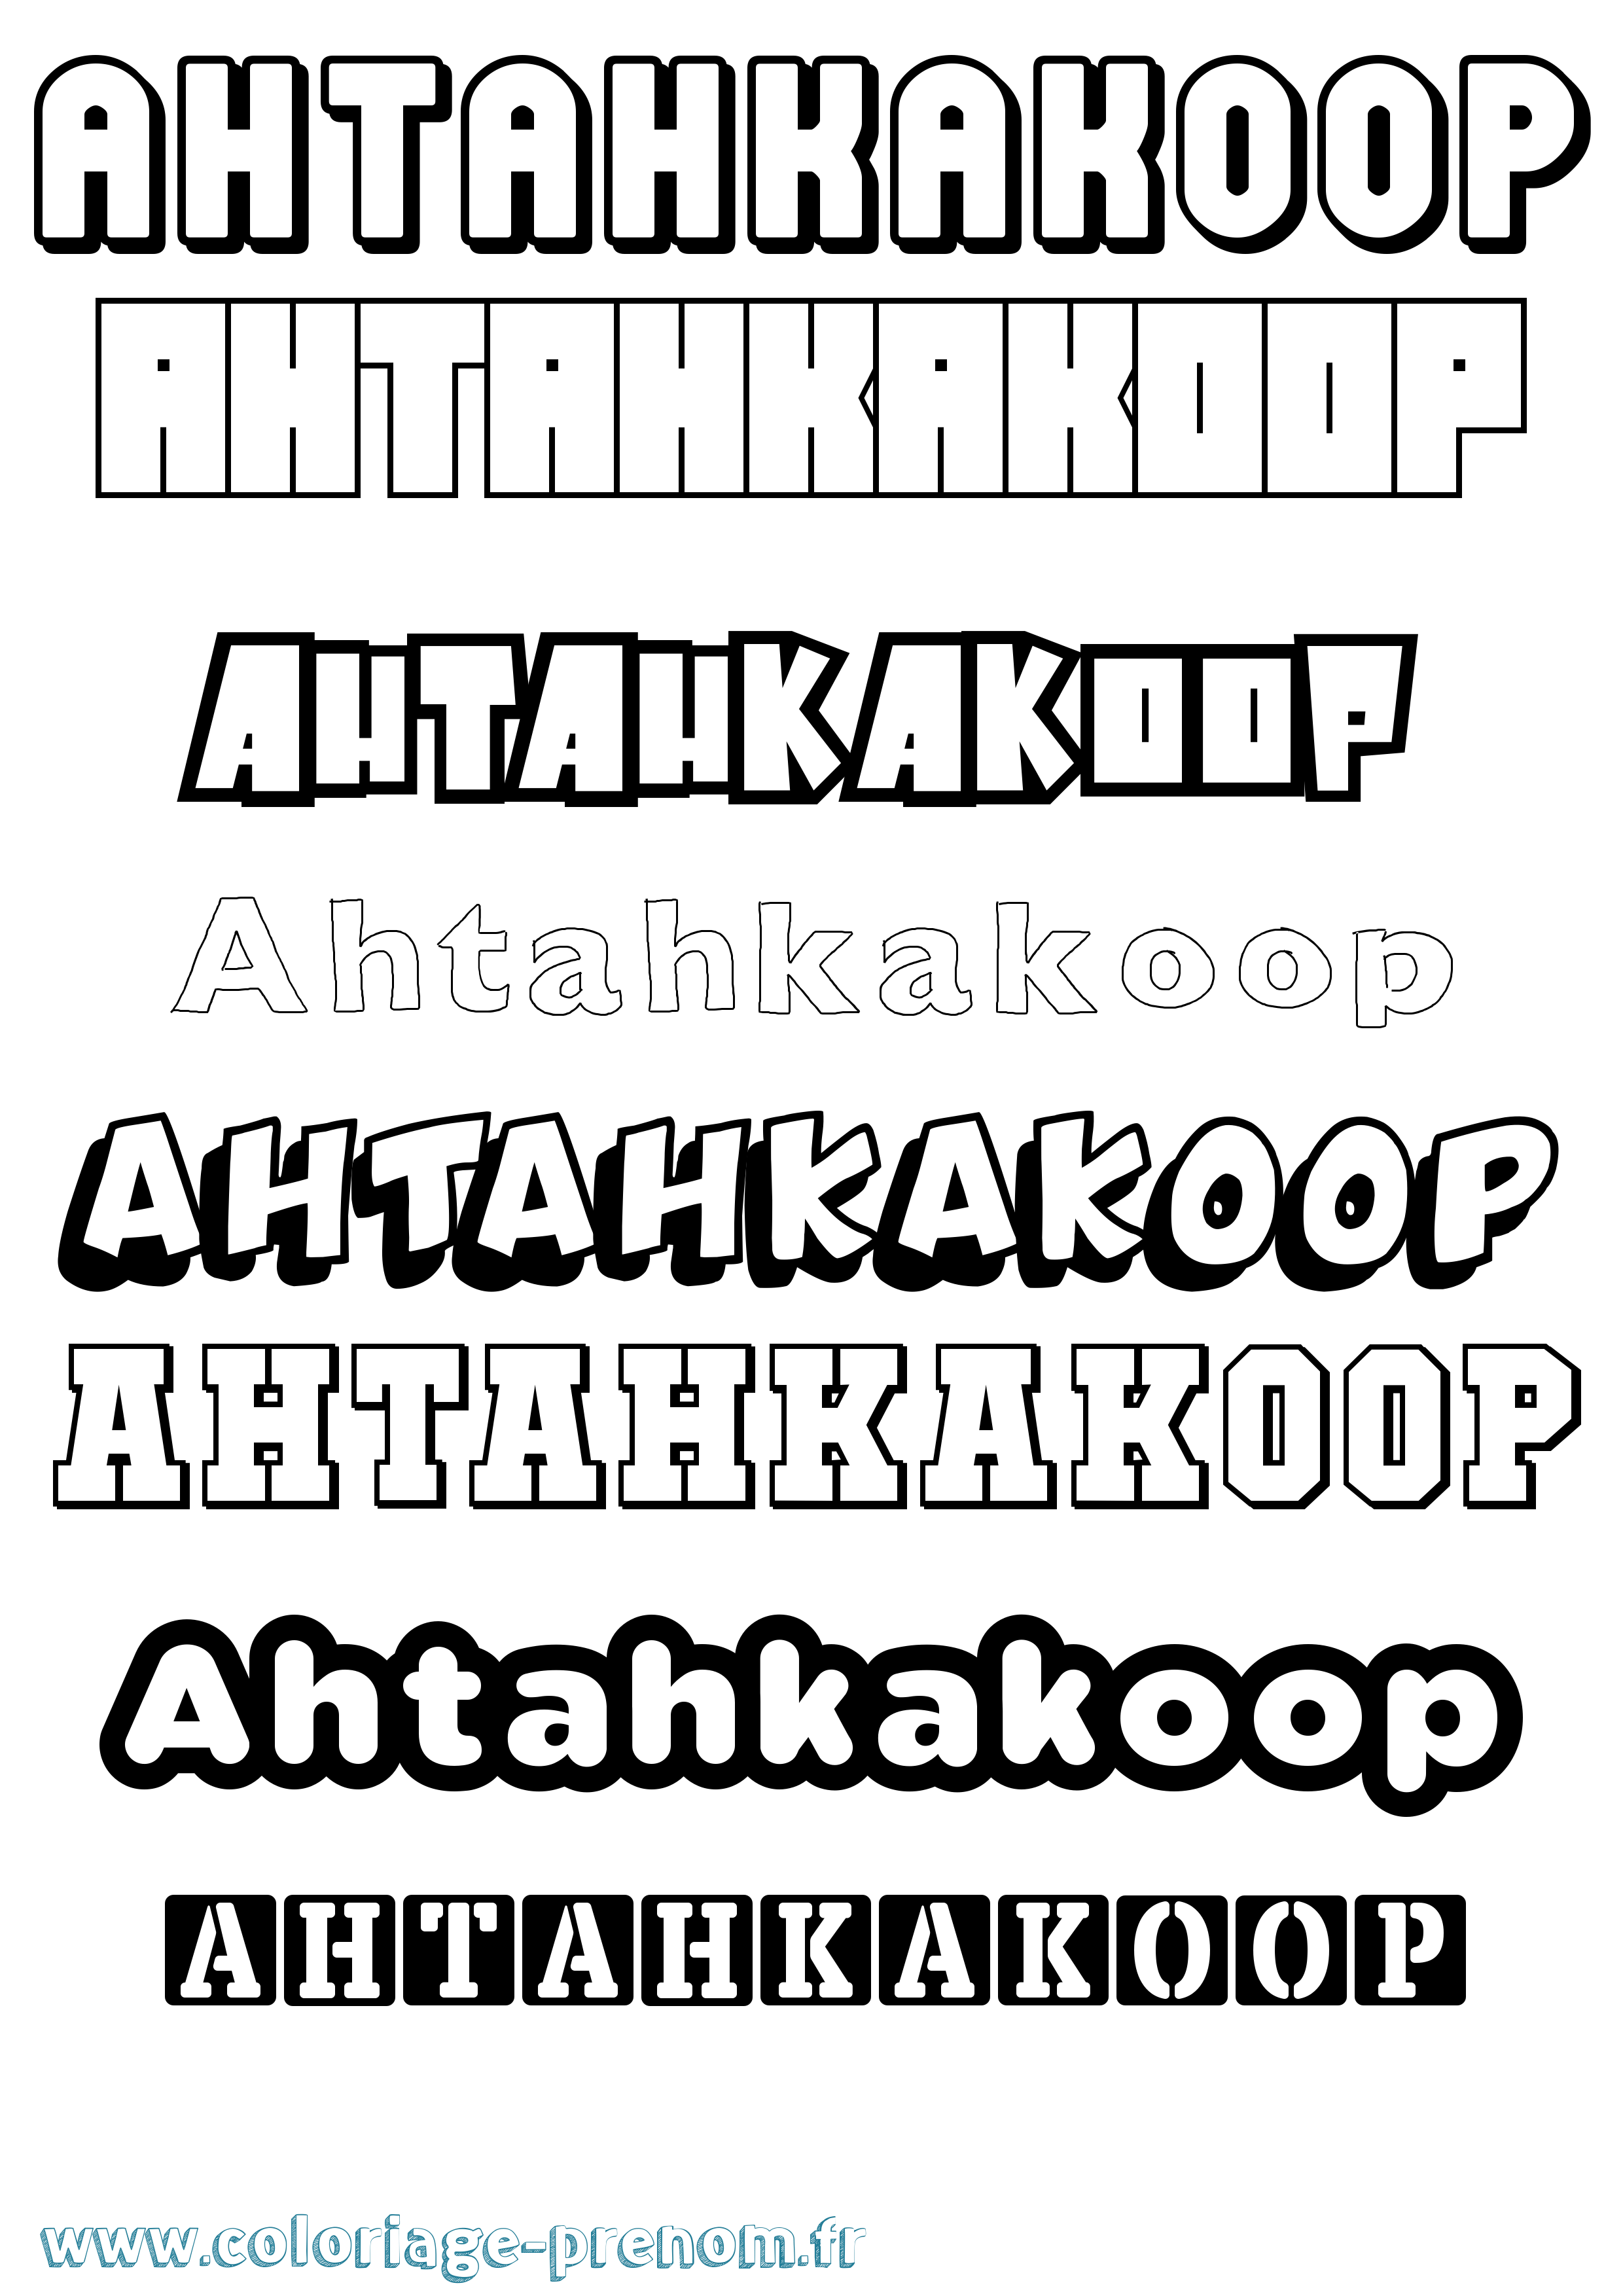 Coloriage prénom Ahtahkakoop Simple